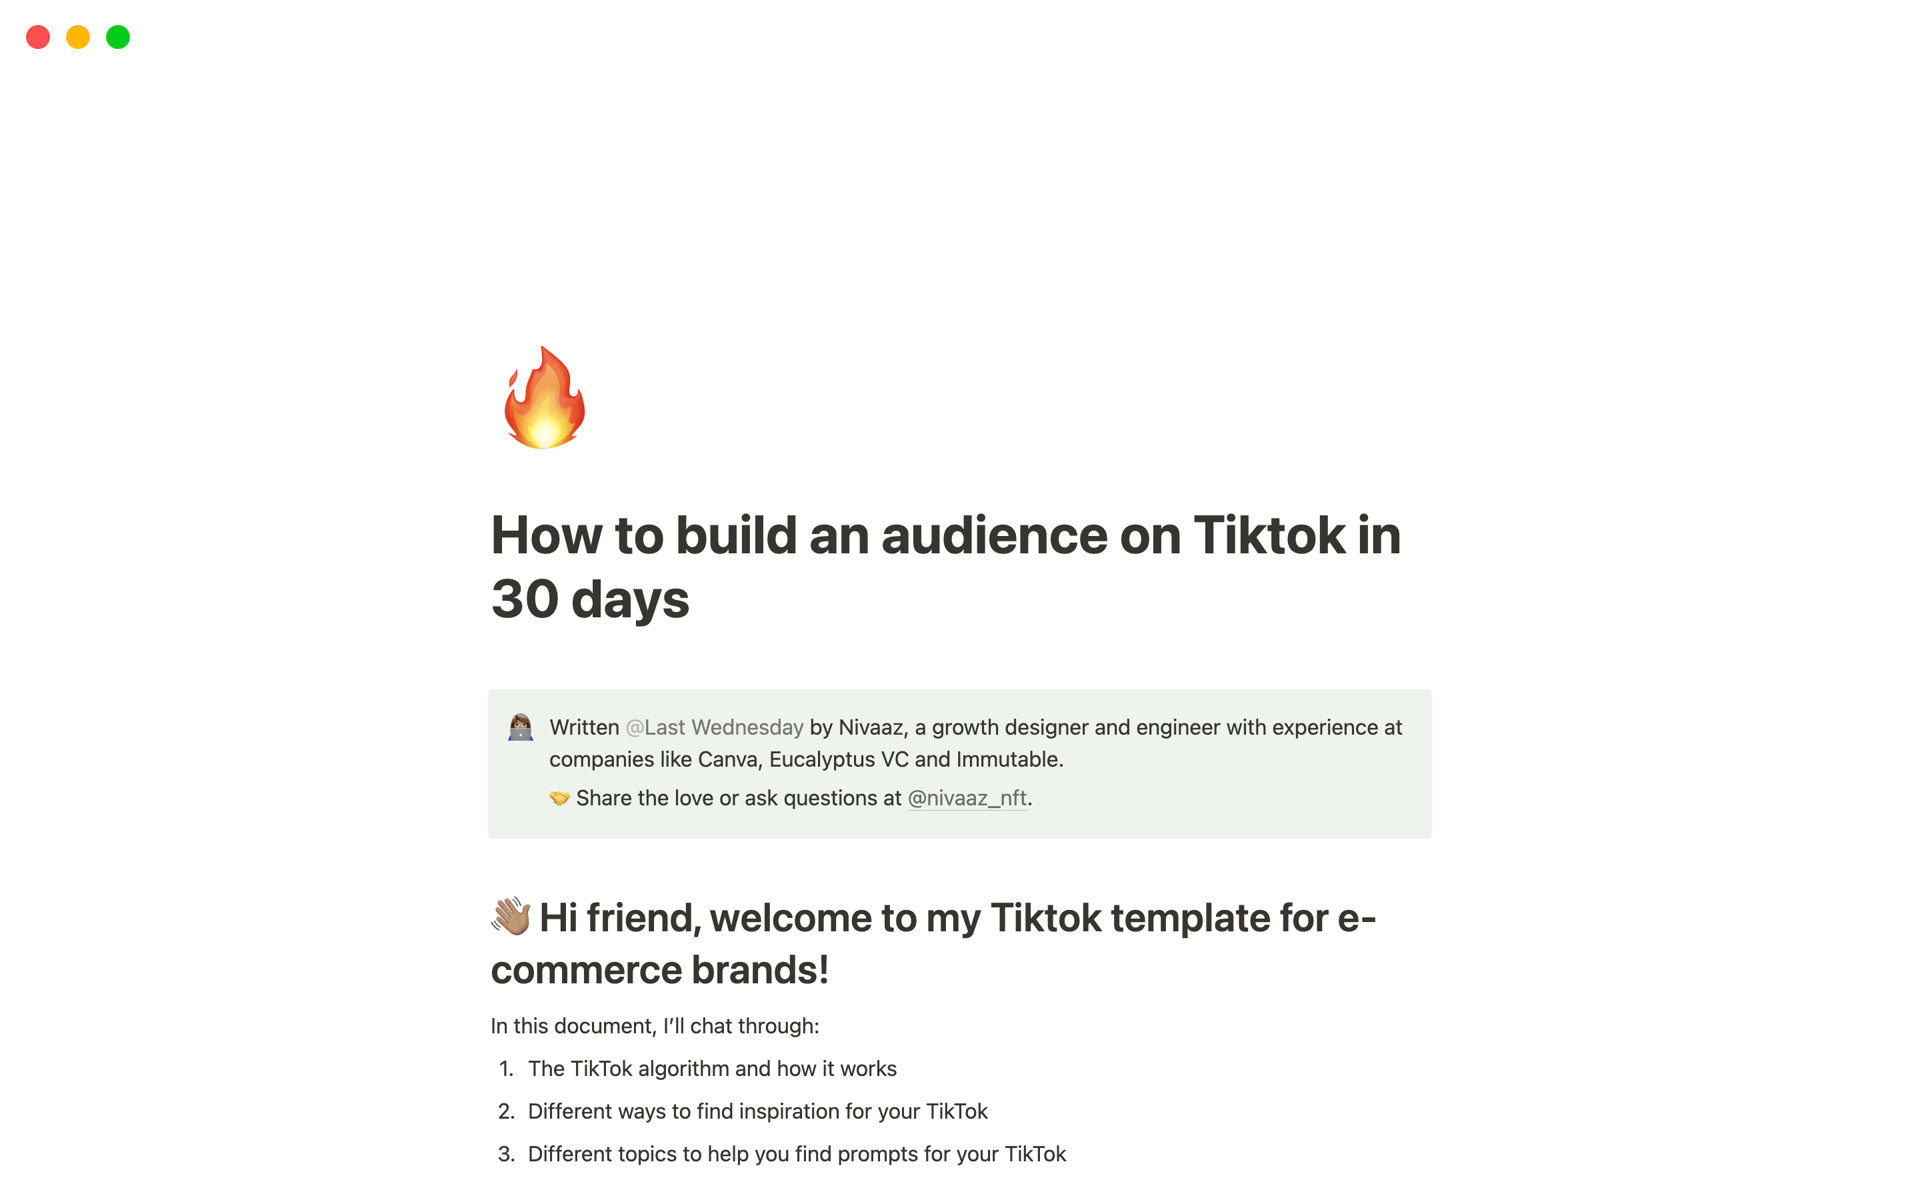 A Tiktok strategy plan & social media calendar to help you launch your brand on Tiktok in 30 days.